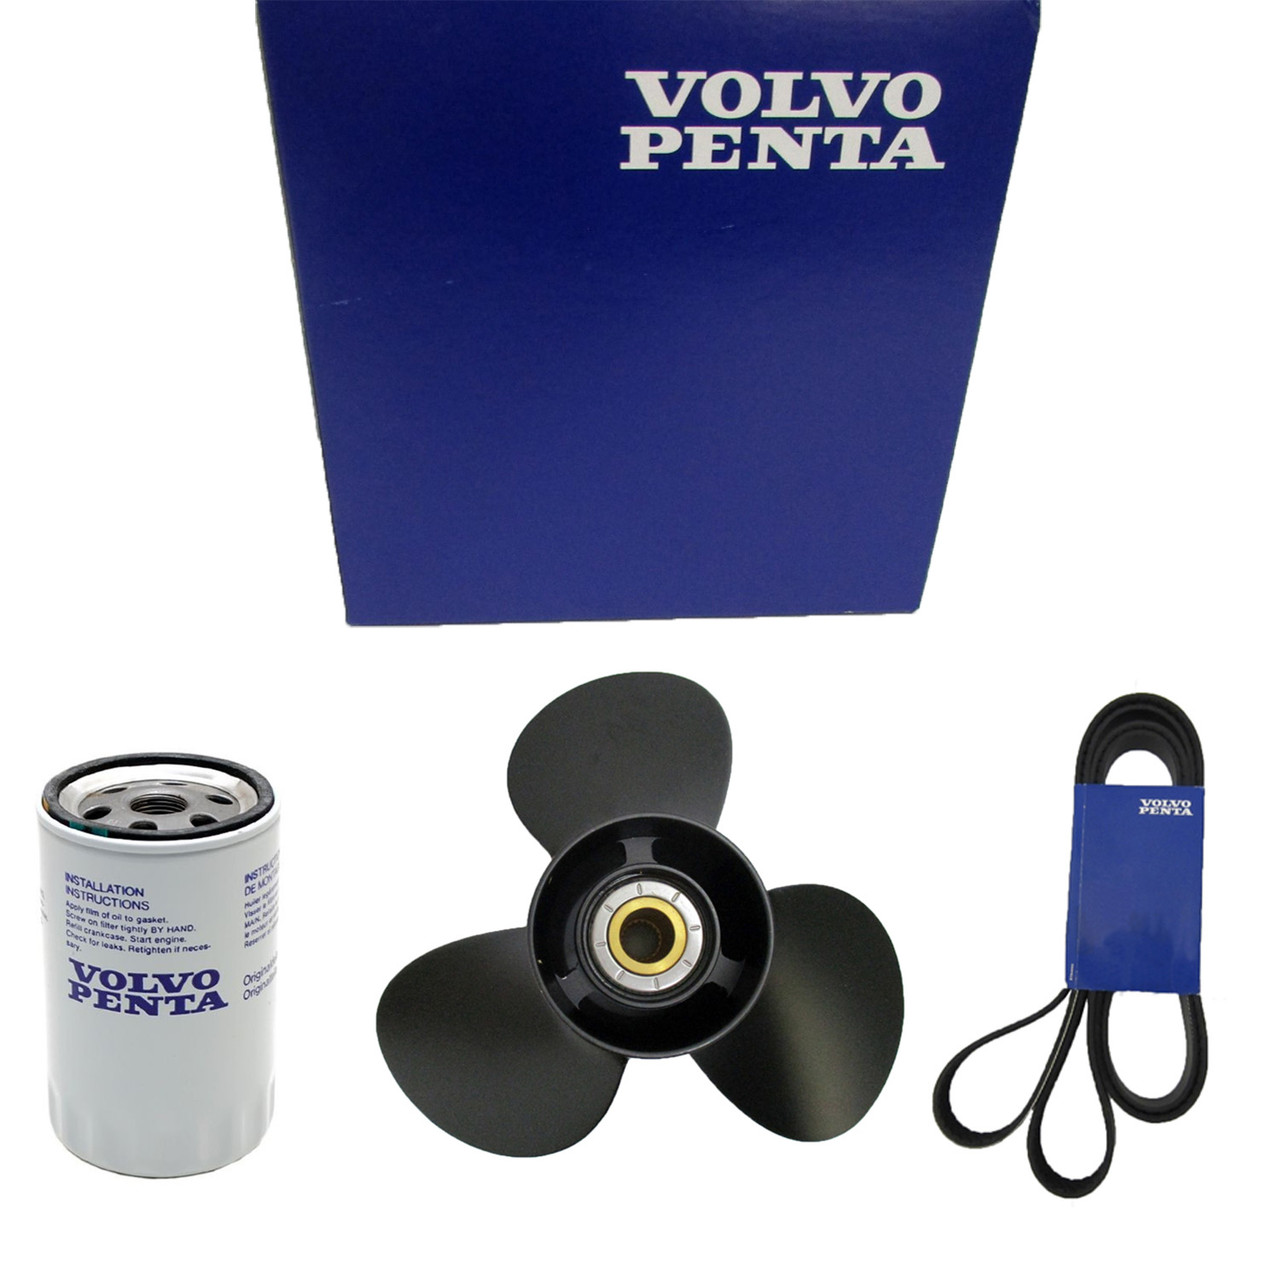 Volvo Penta New OEM Reversing Gear Kit, 23268293